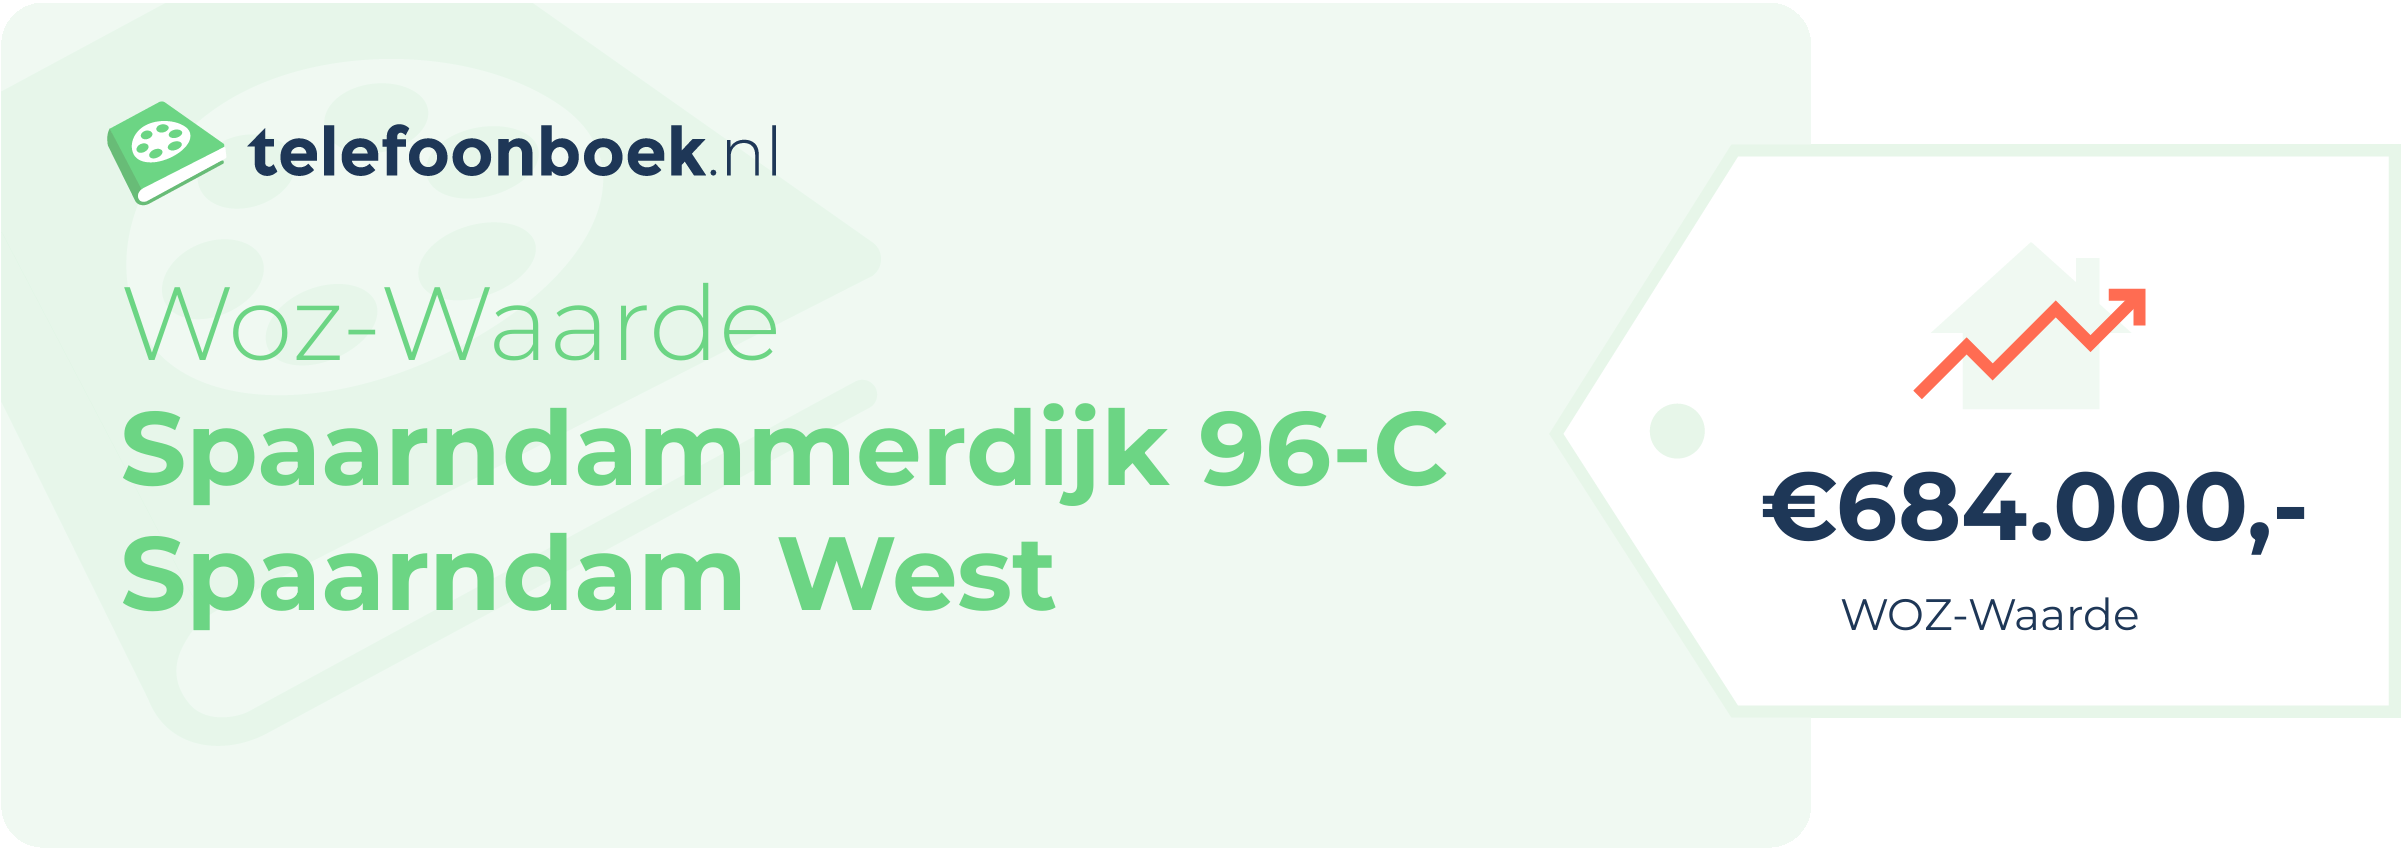 WOZ-waarde Spaarndammerdijk 96-C Spaarndam West